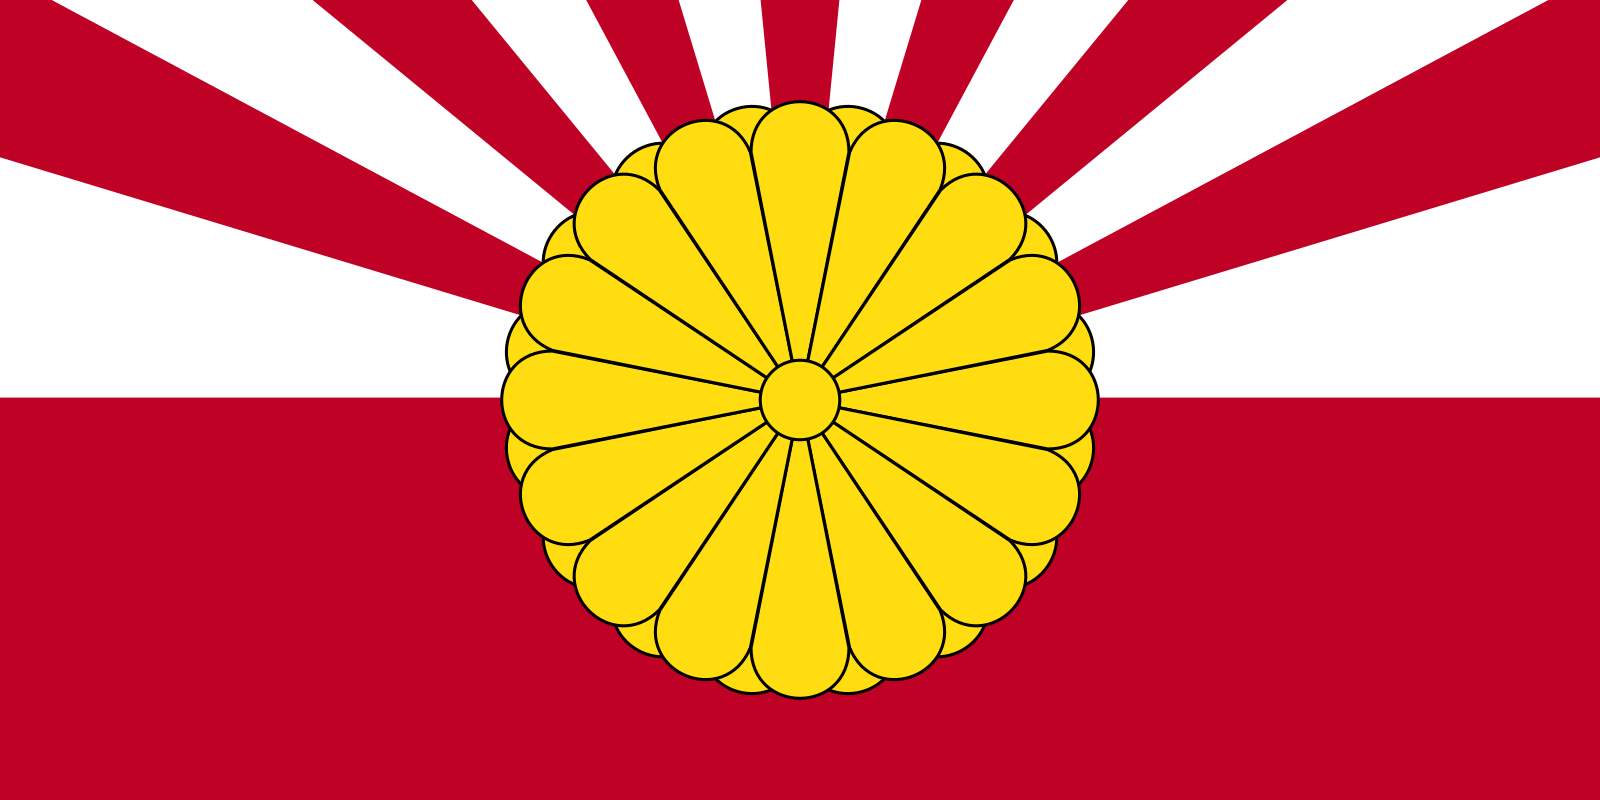 State Flag of Japan (I&B4)